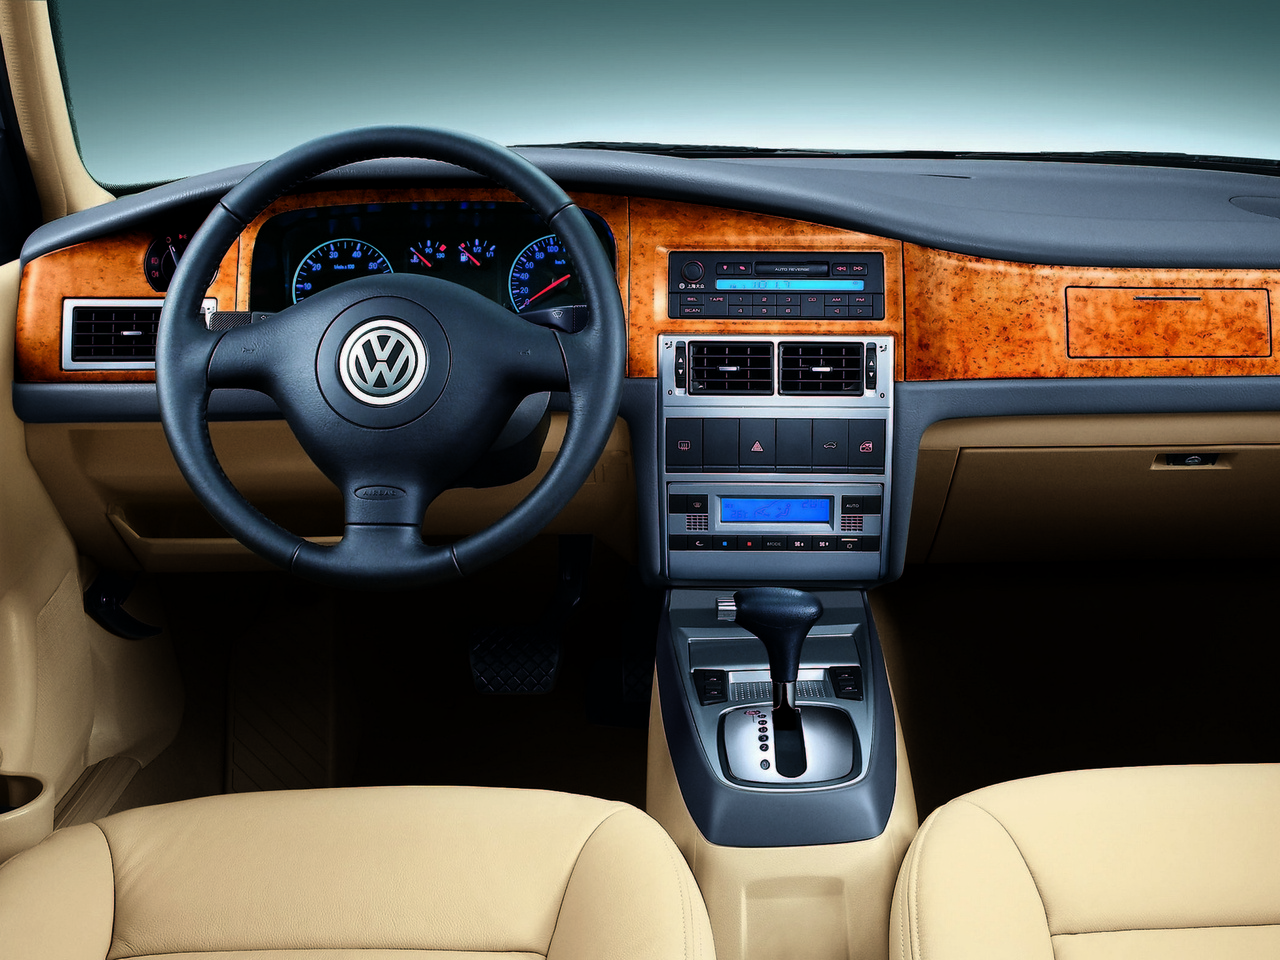 volkswagen santana vista automatico interior painel